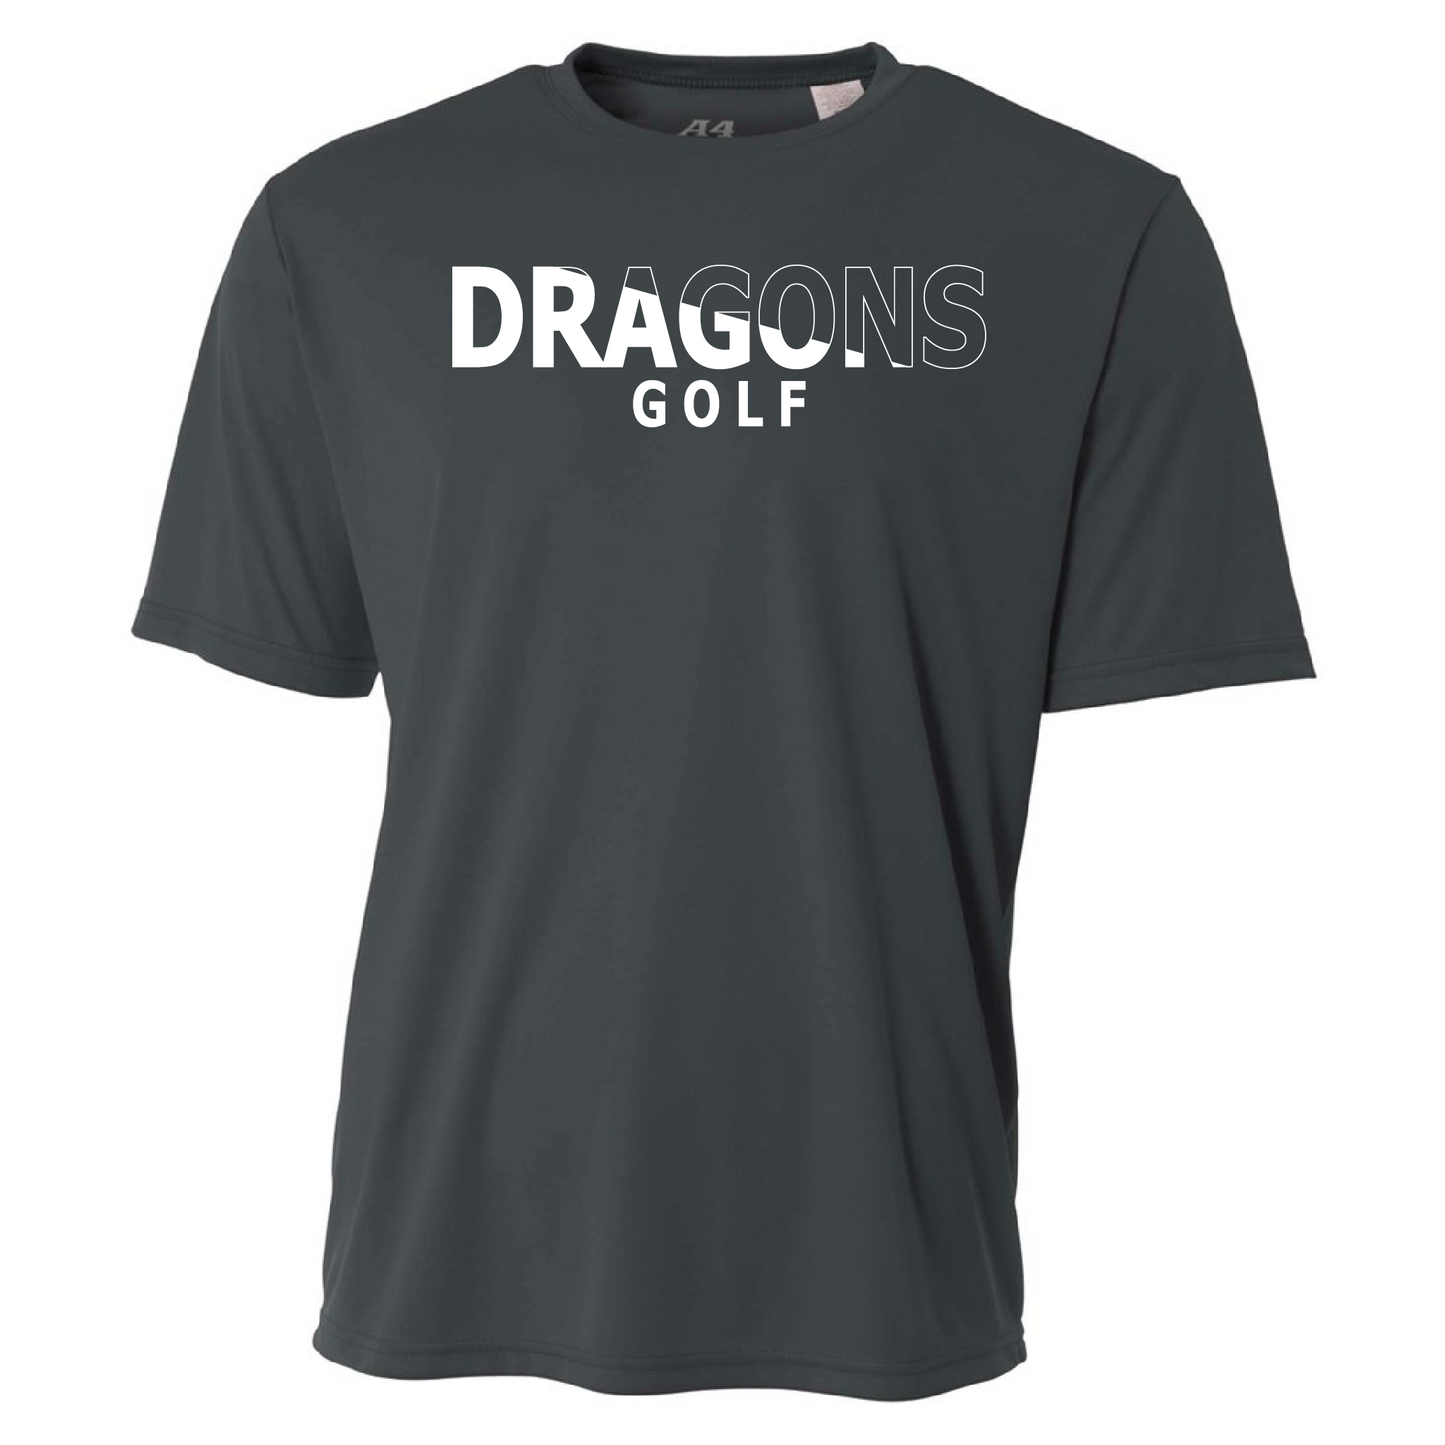 Mens S/S T-Shirt - Dragons Golf Slashed White